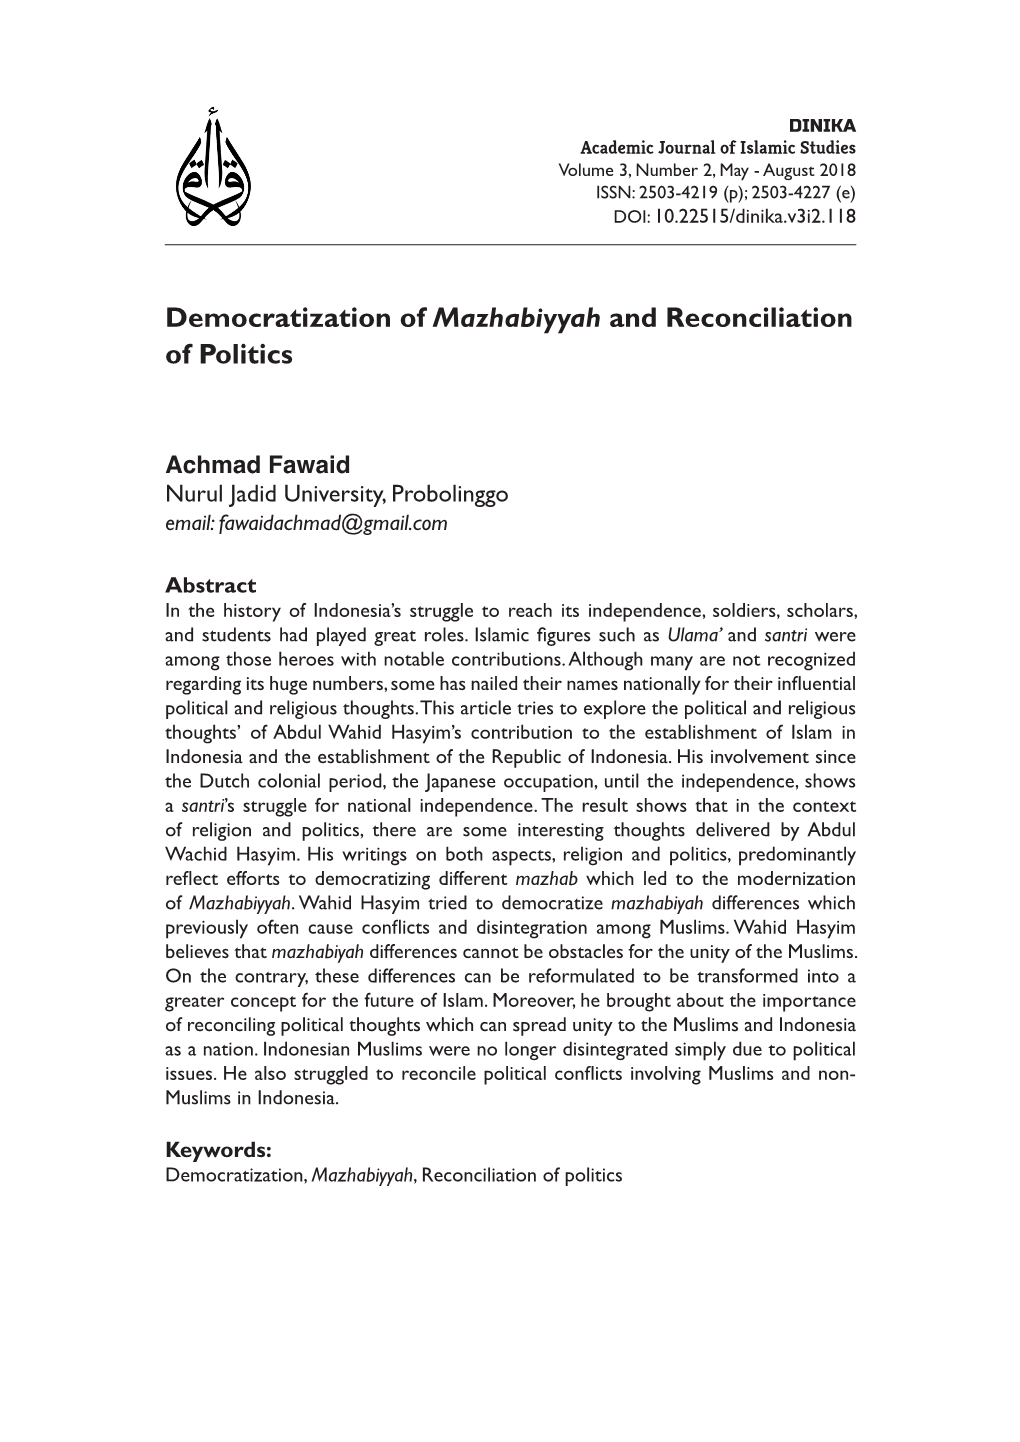 Democratization of Mazhabiyyah and Reconciliation of Politics